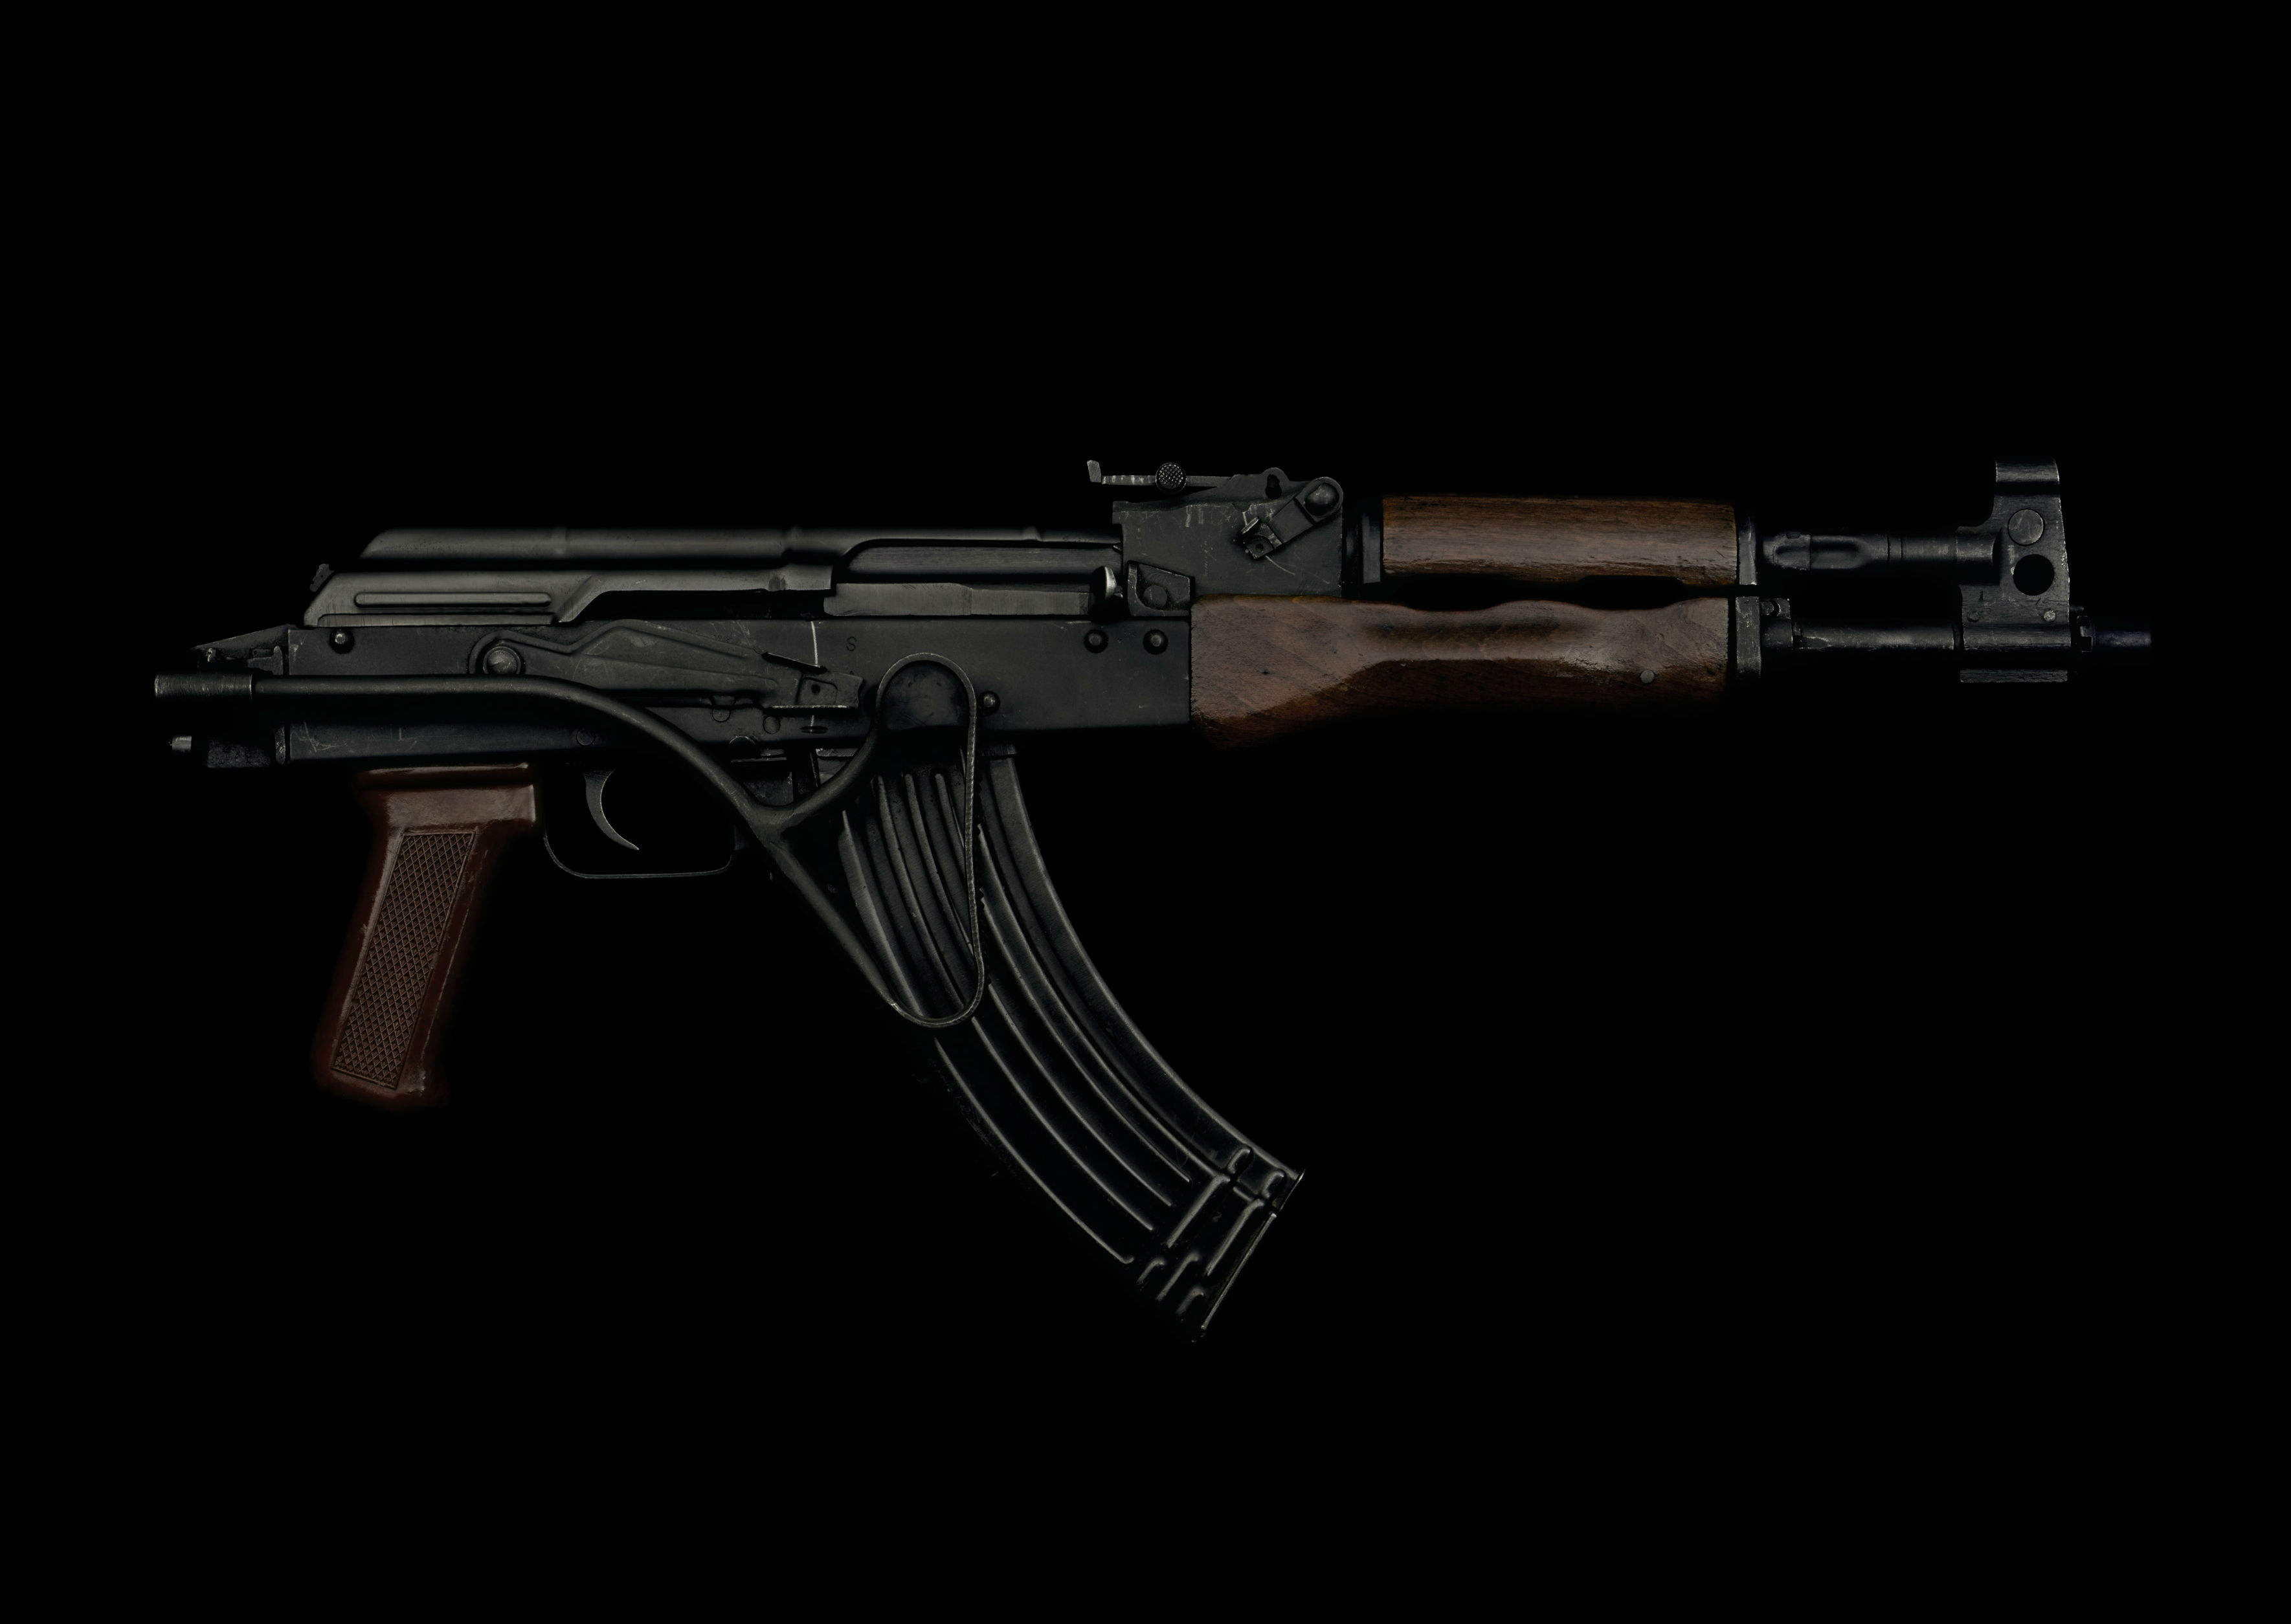 Akm Assault Rifle Picture